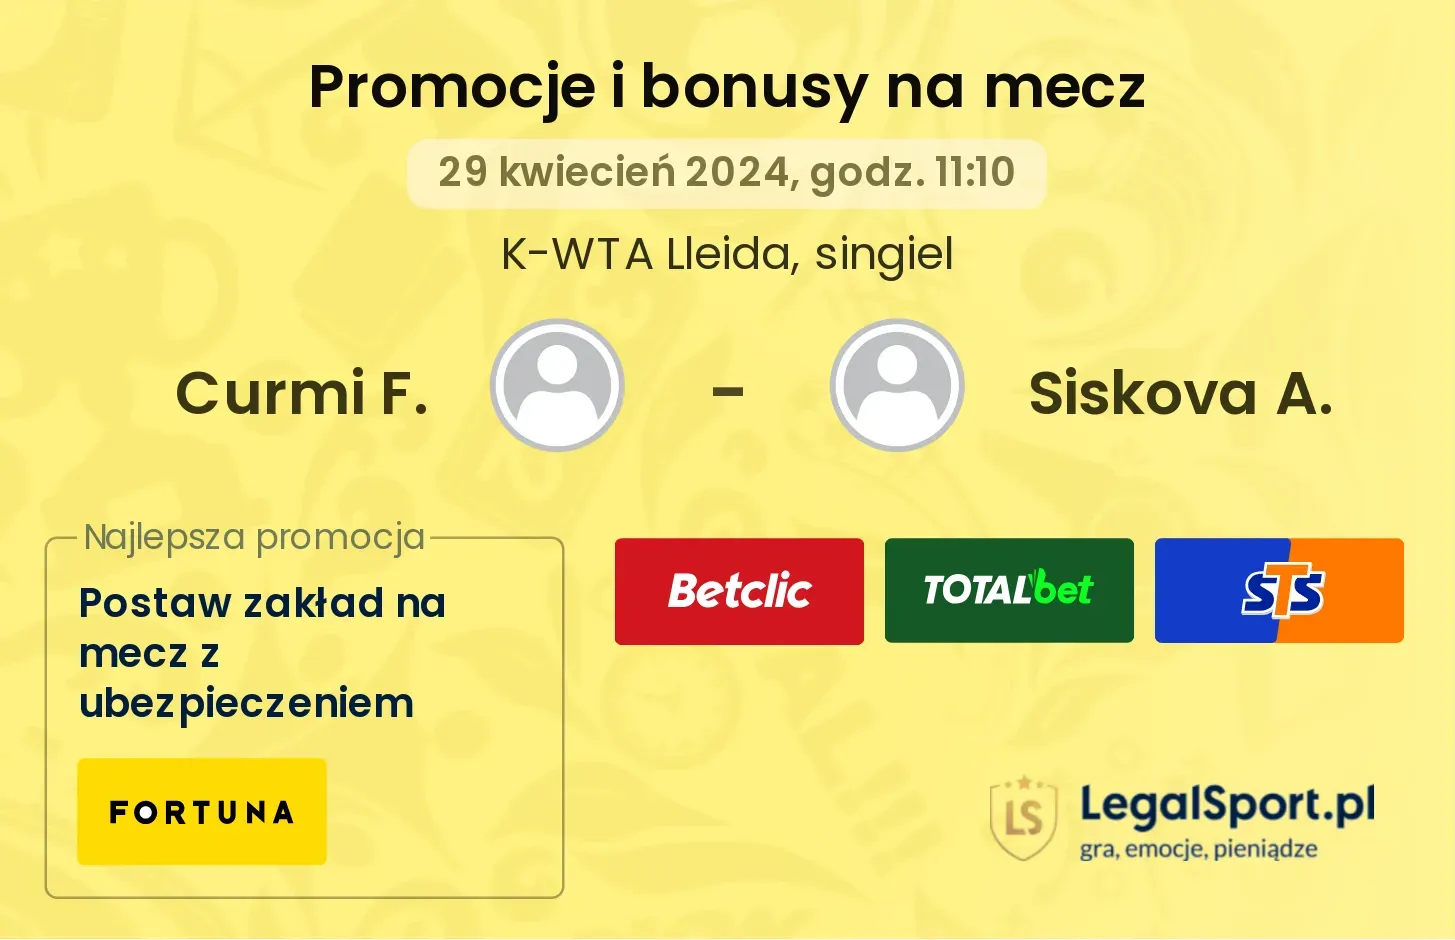 Curmi F. - Siskova A. promocje bonusy na mecz